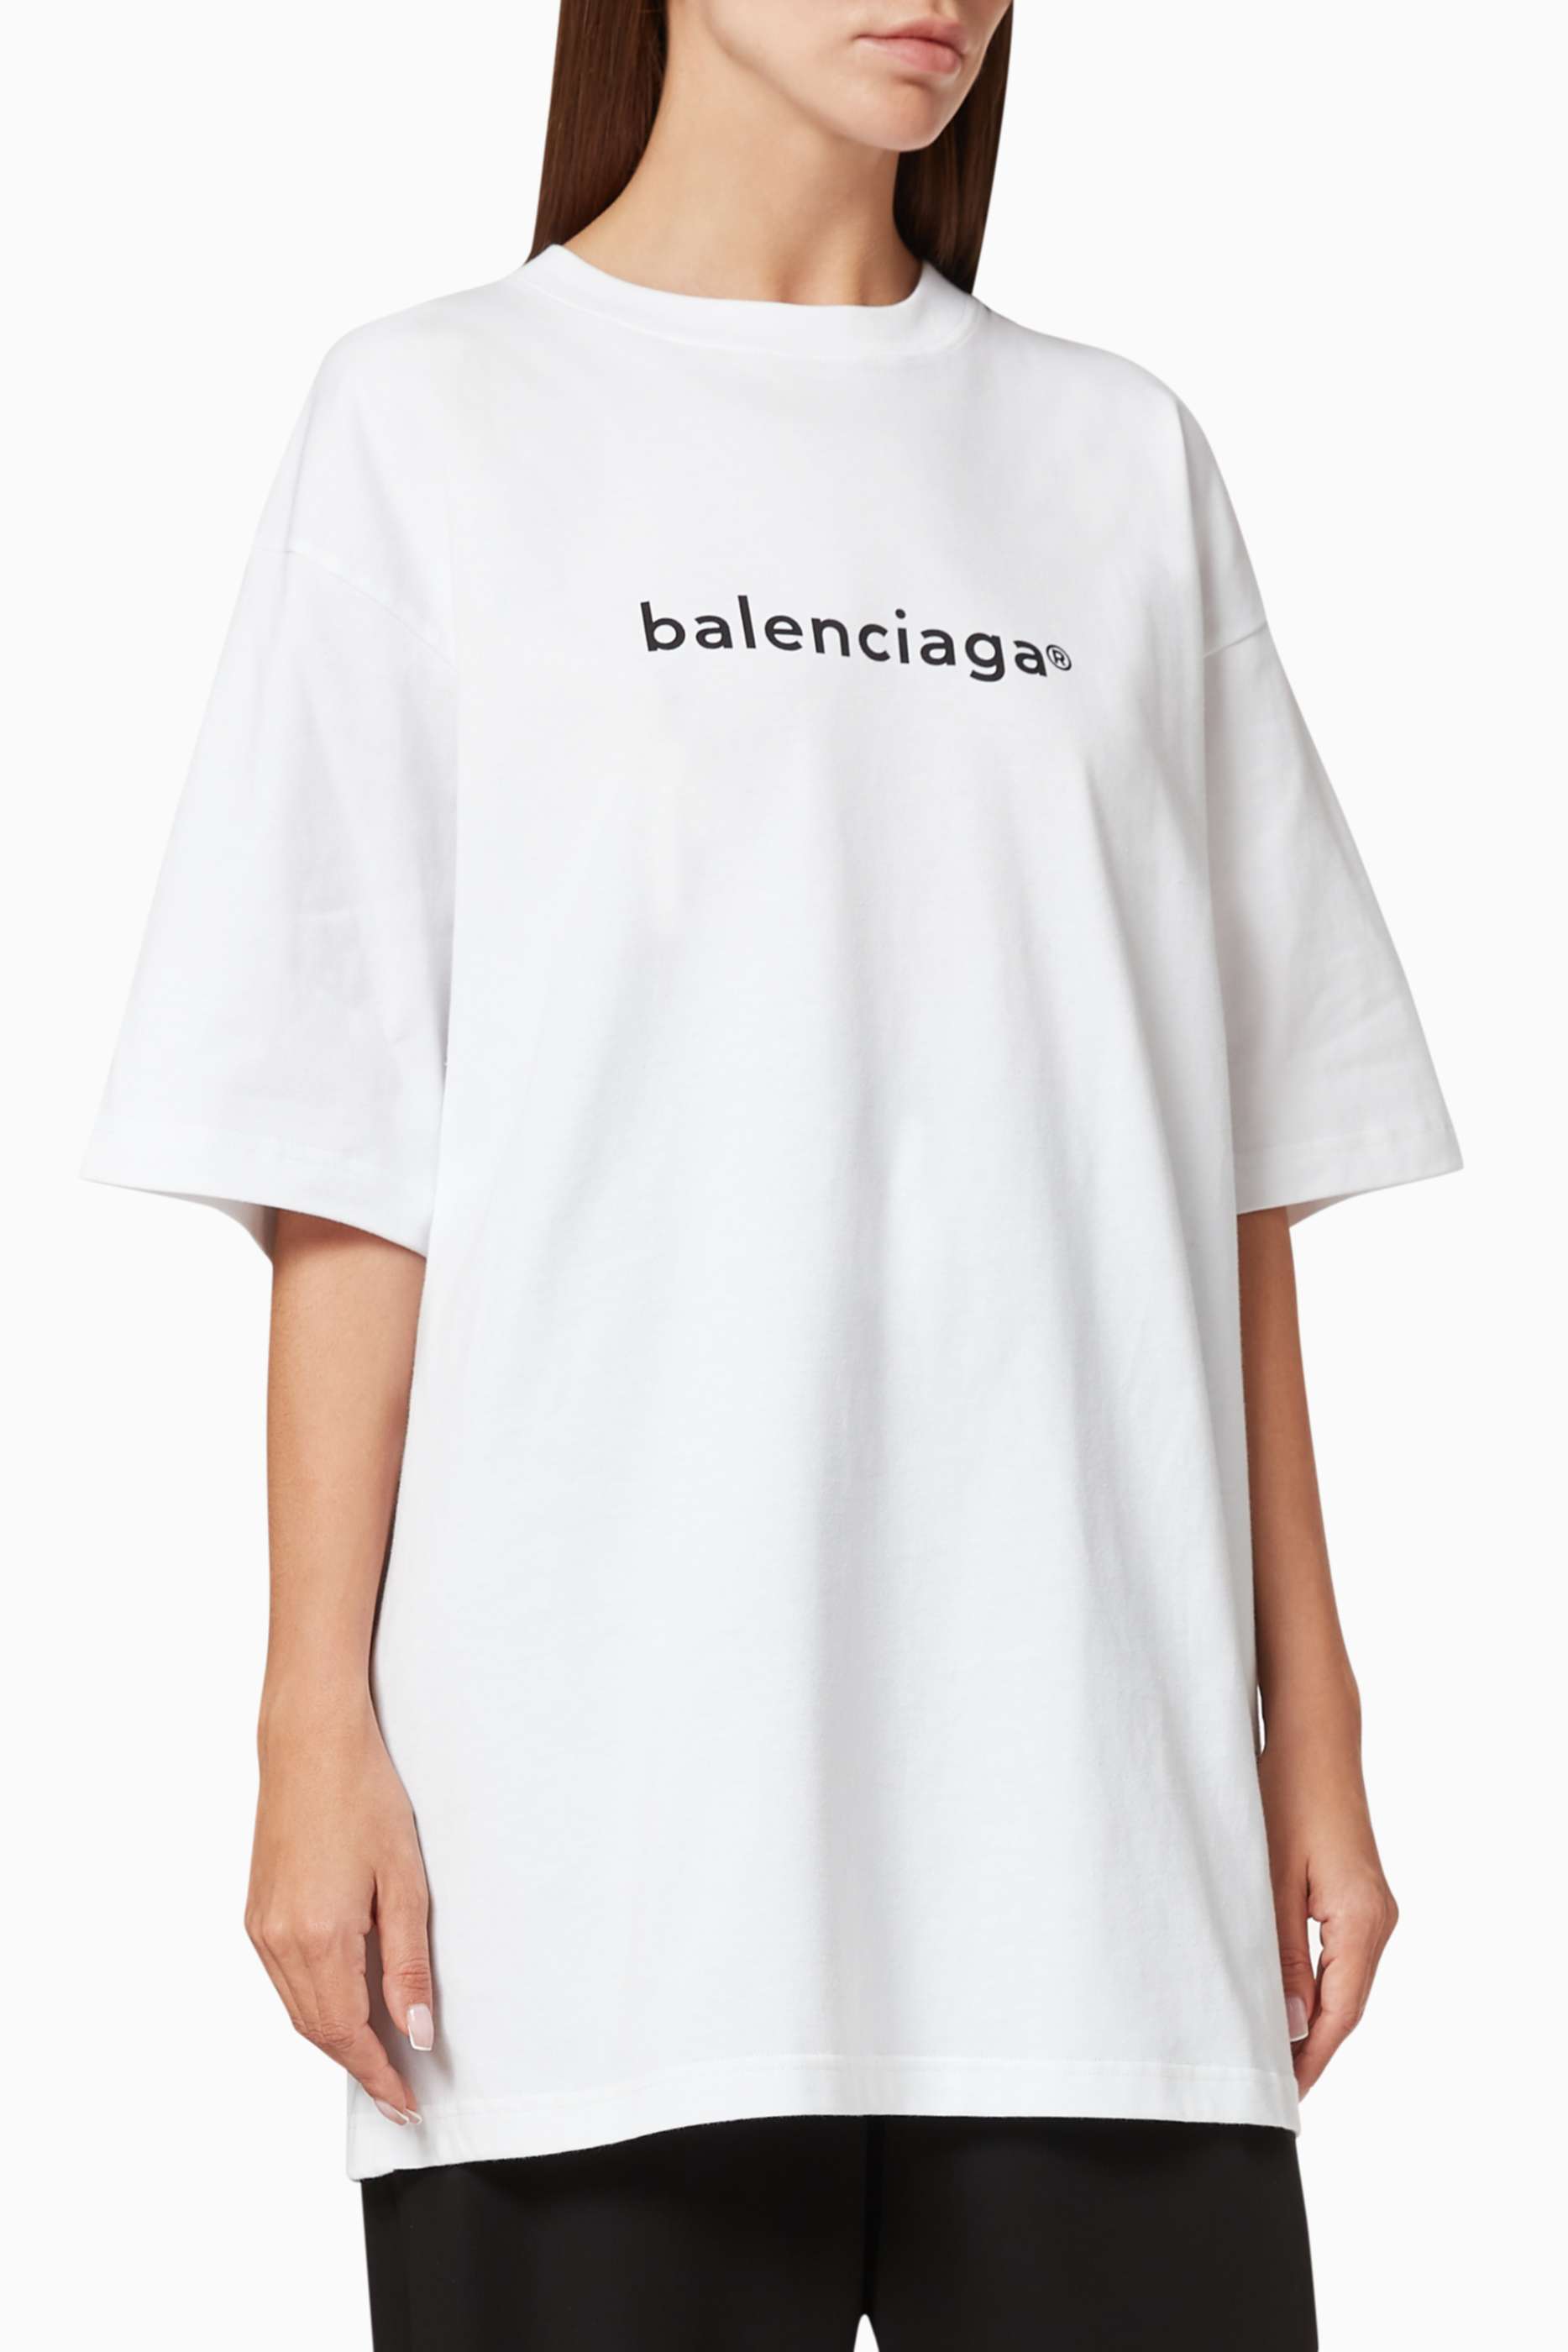 Shop Balenciaga White Paris T-Shirt for Women | Ounass UAE